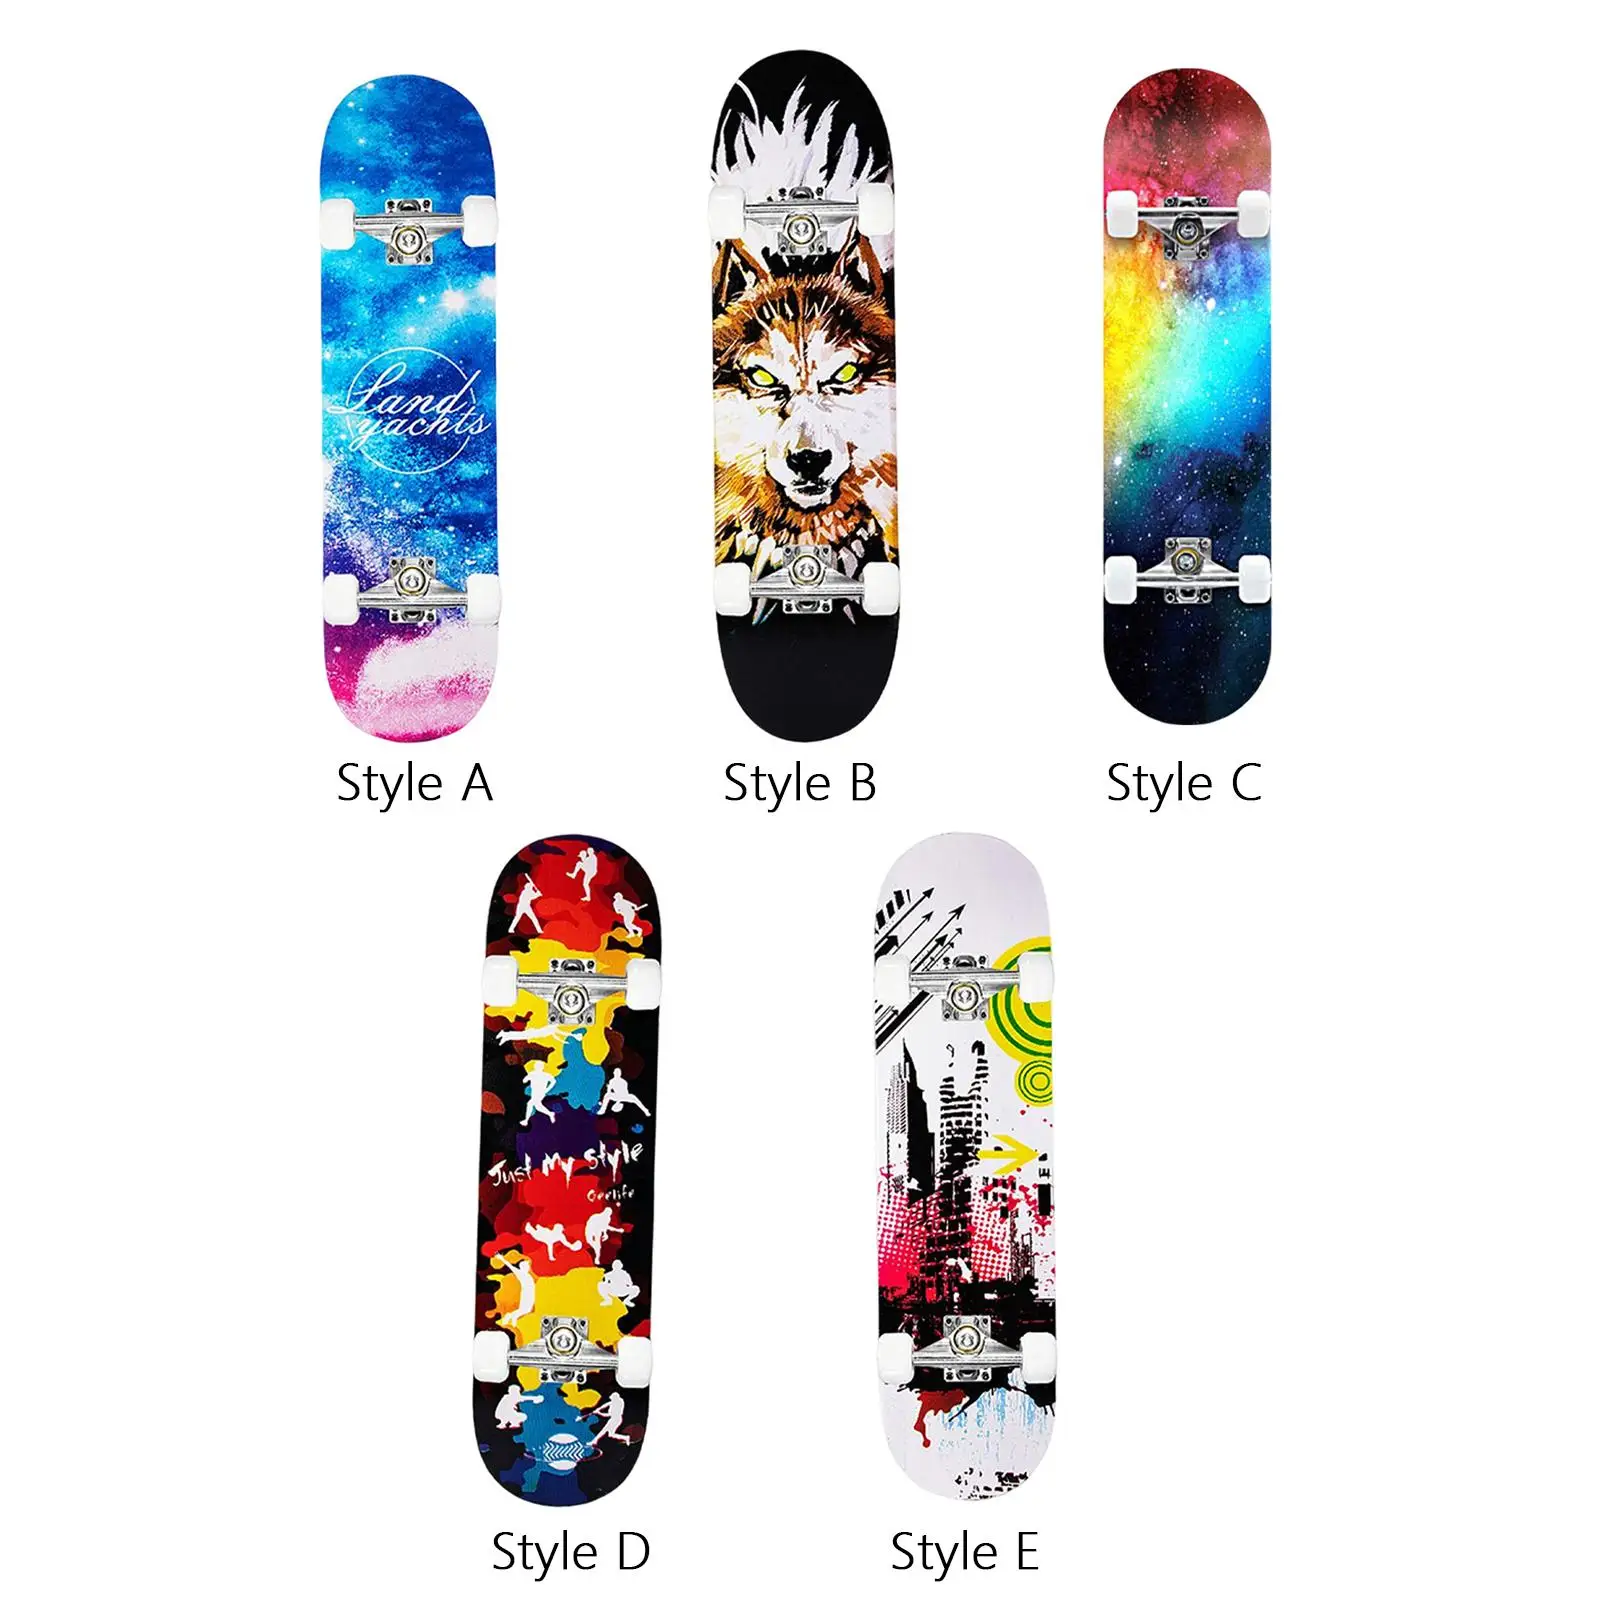 Portable Skateboard Smooth Wheels 31inch Skateboard for Adults Teens Boys